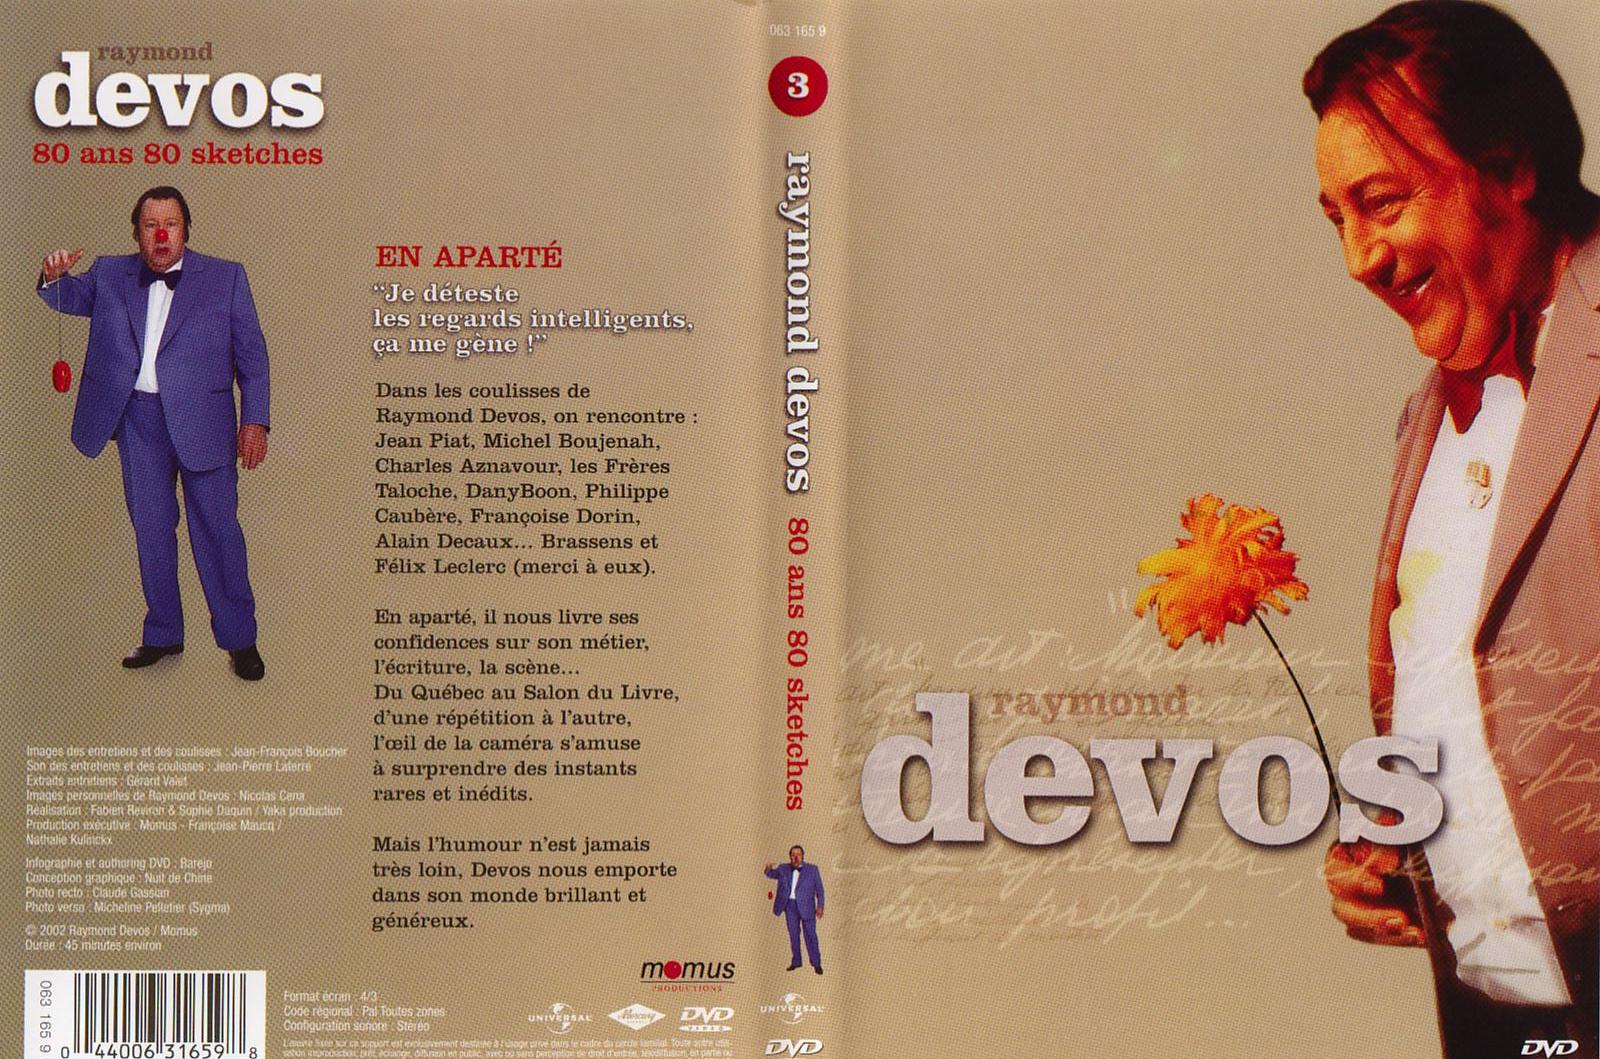 Jaquette DVD Raymond Devos vol 3